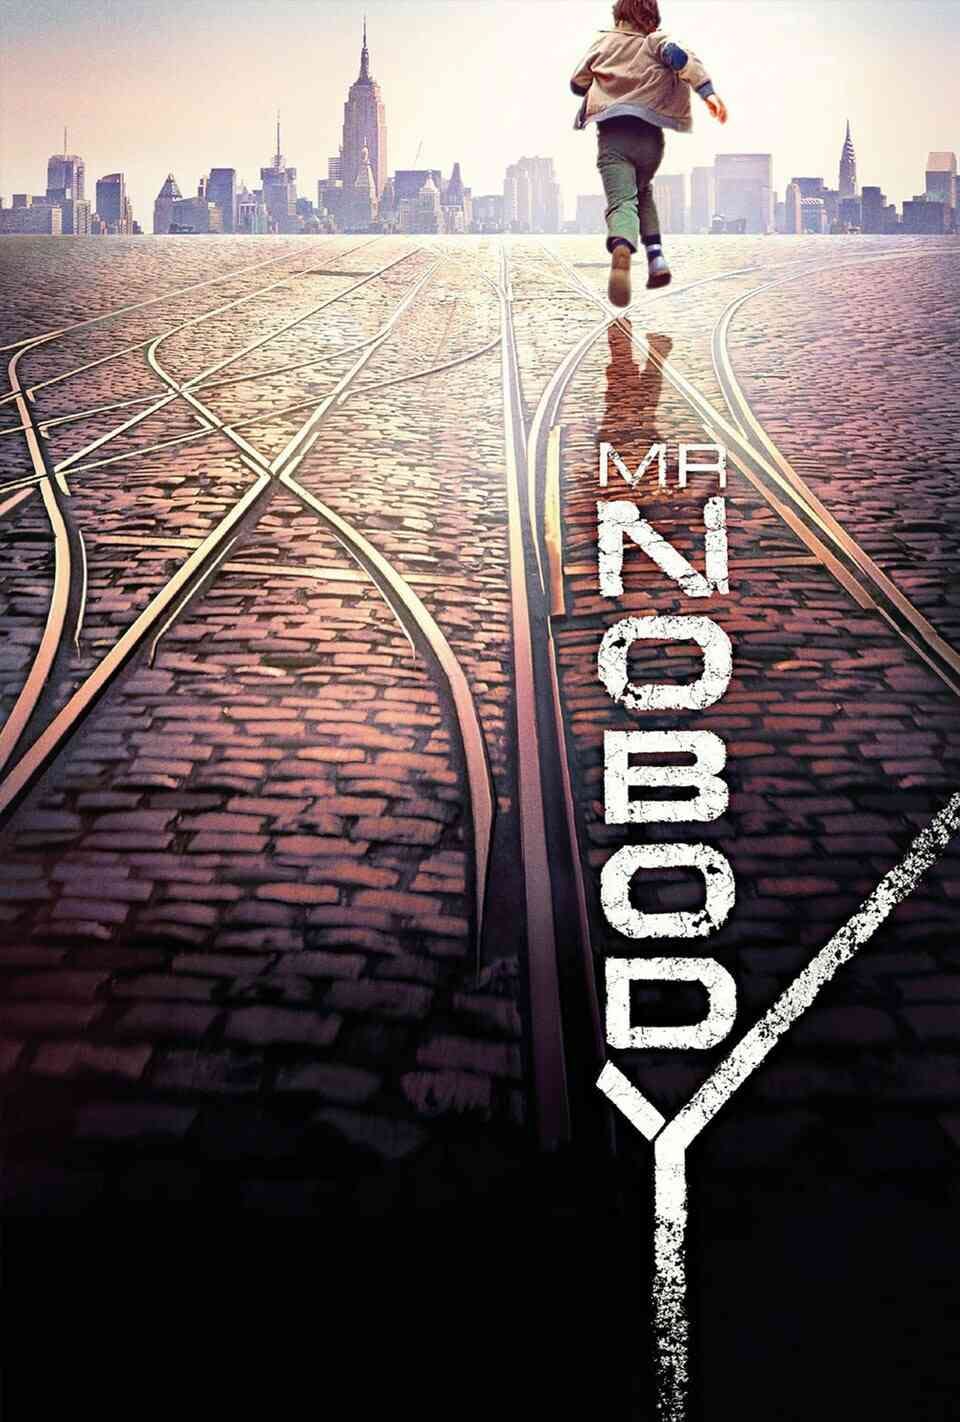 Read Mr. Nobody screenplay (poster)